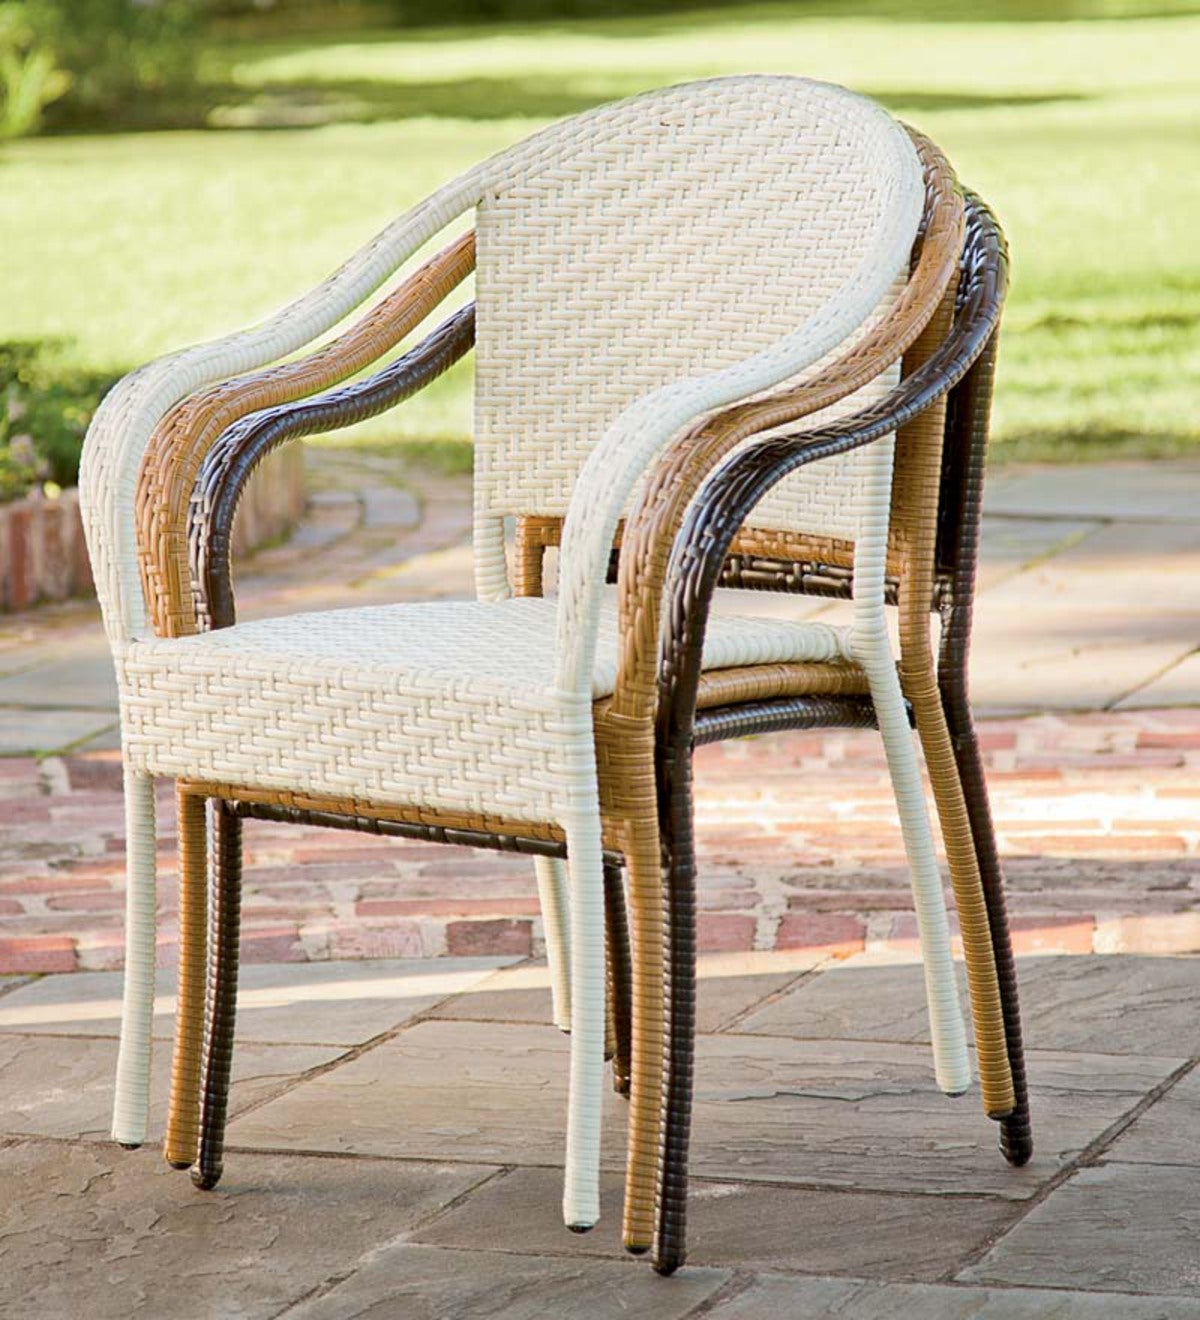 White Wicker Chairs Outdoor : Wicker Chairs | Bodewasude